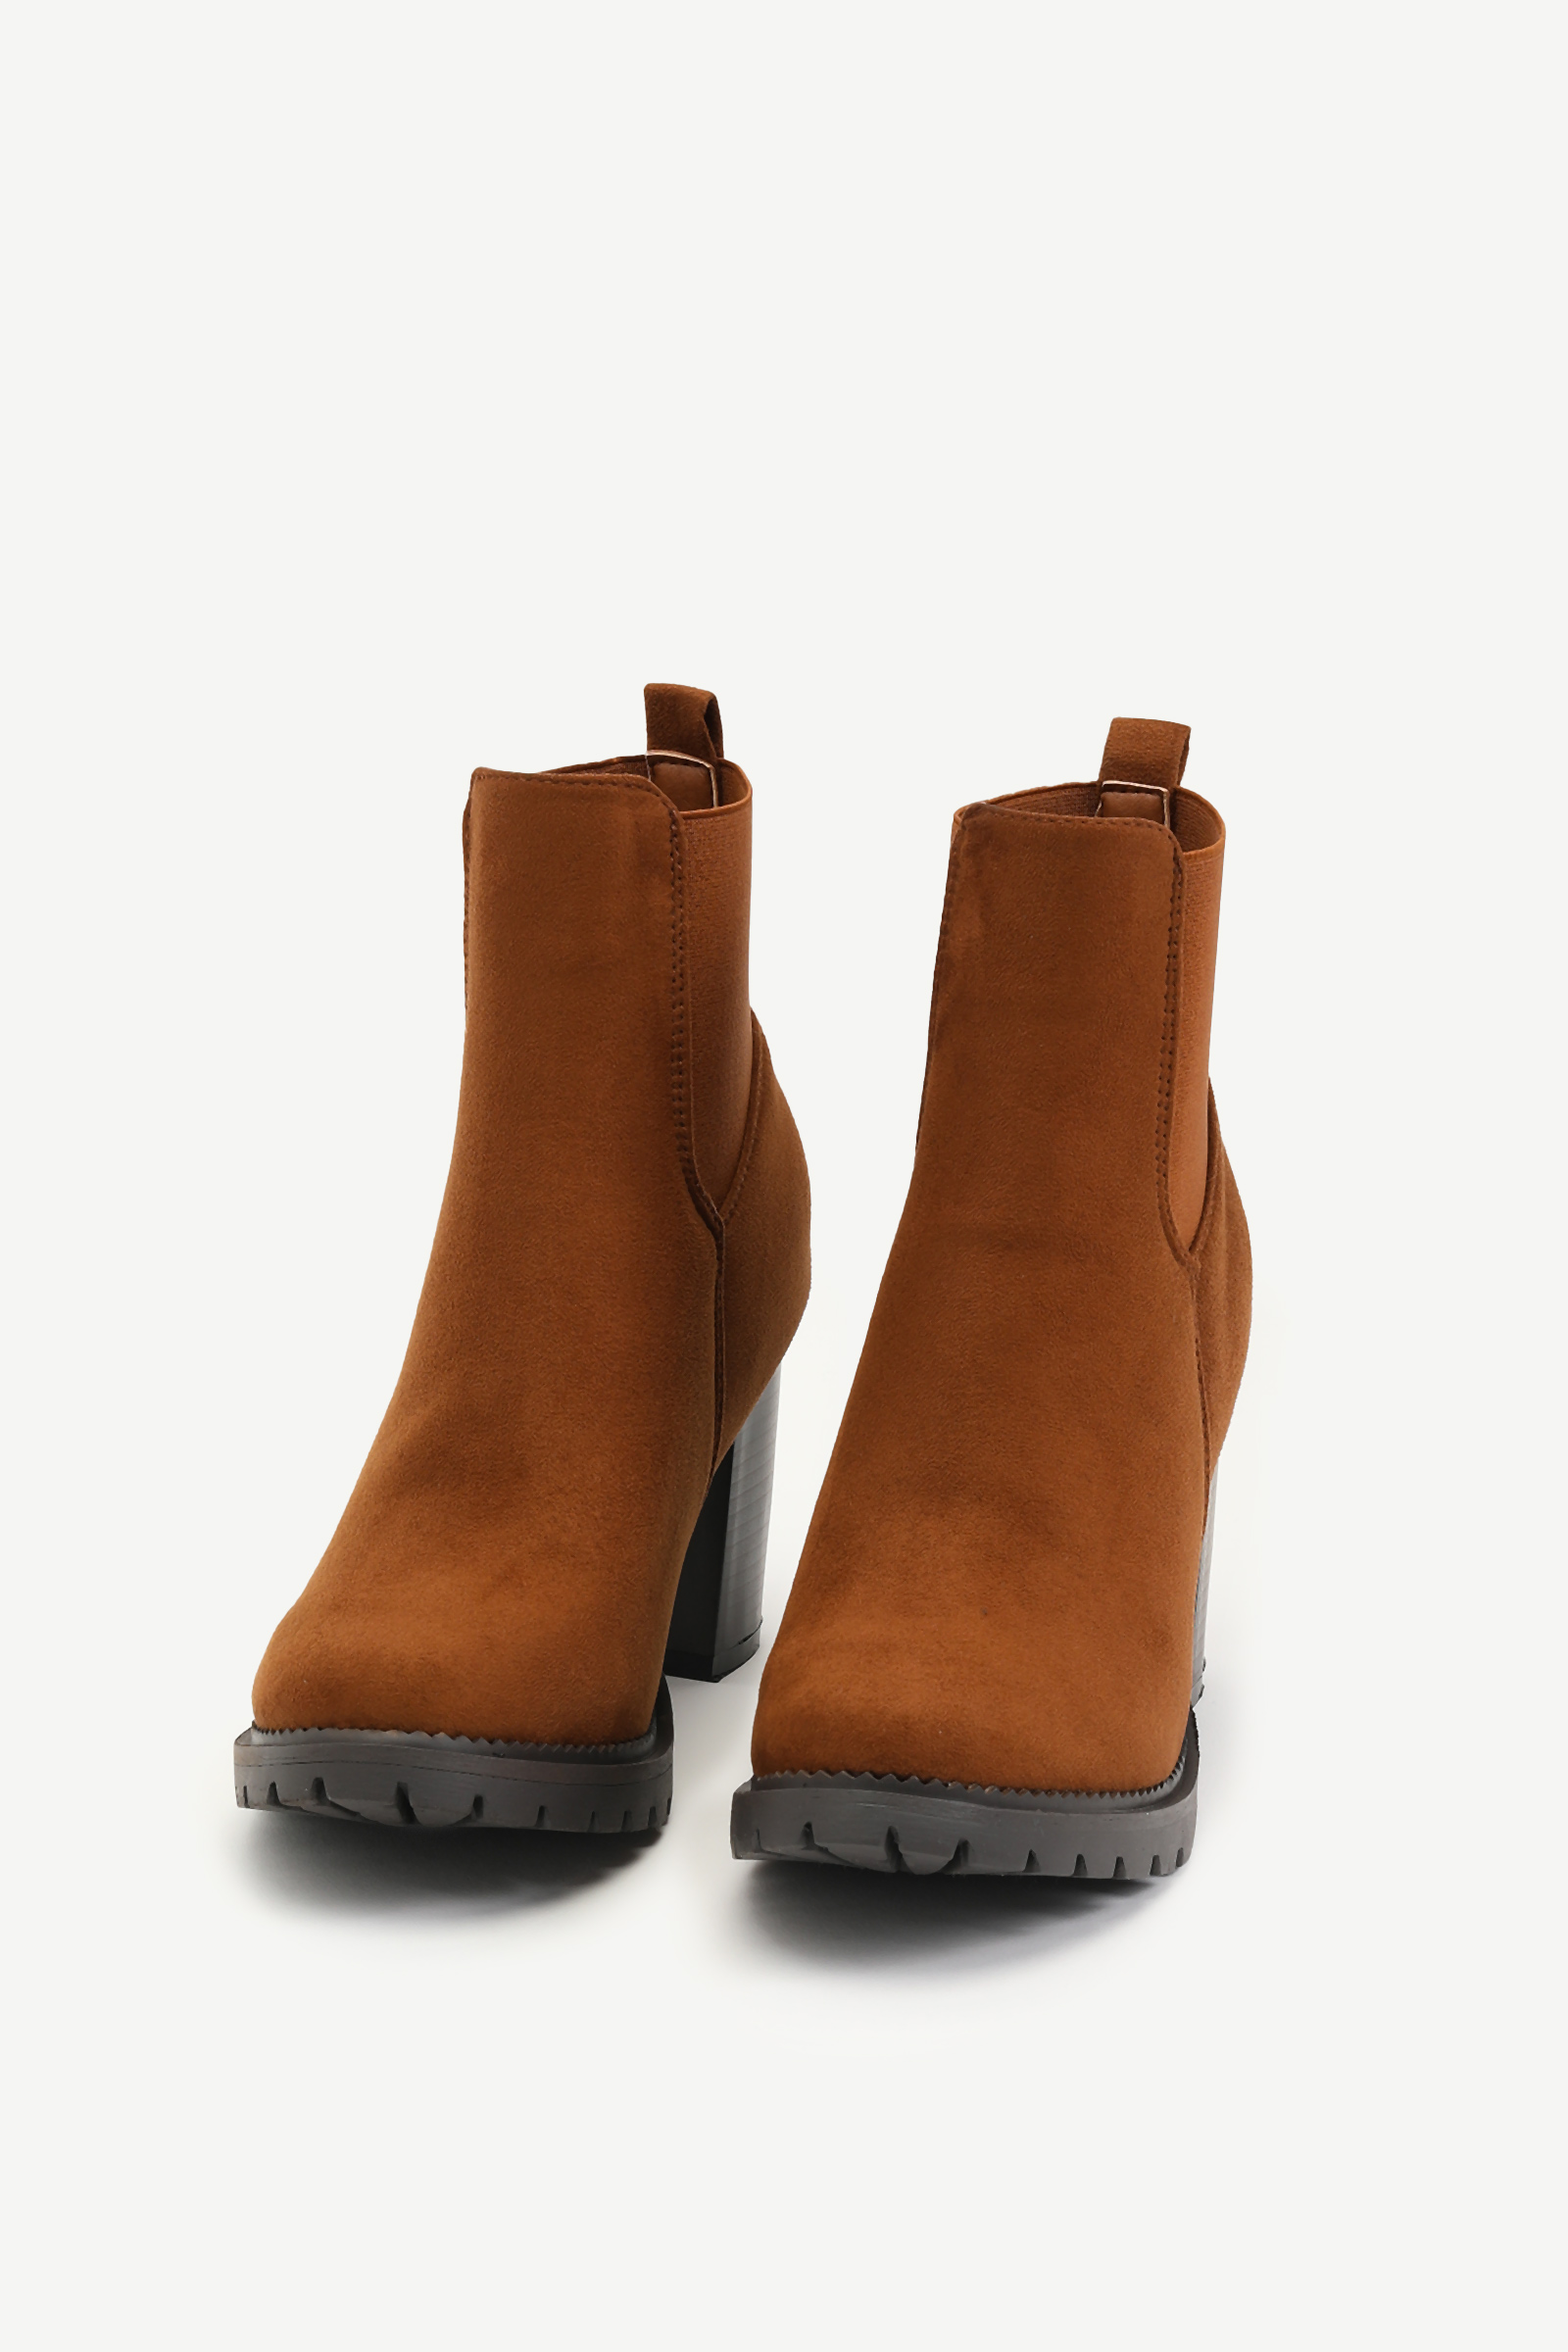 Details about   Ardene Women's Size 7 Boots Booties New Hidden Wedge